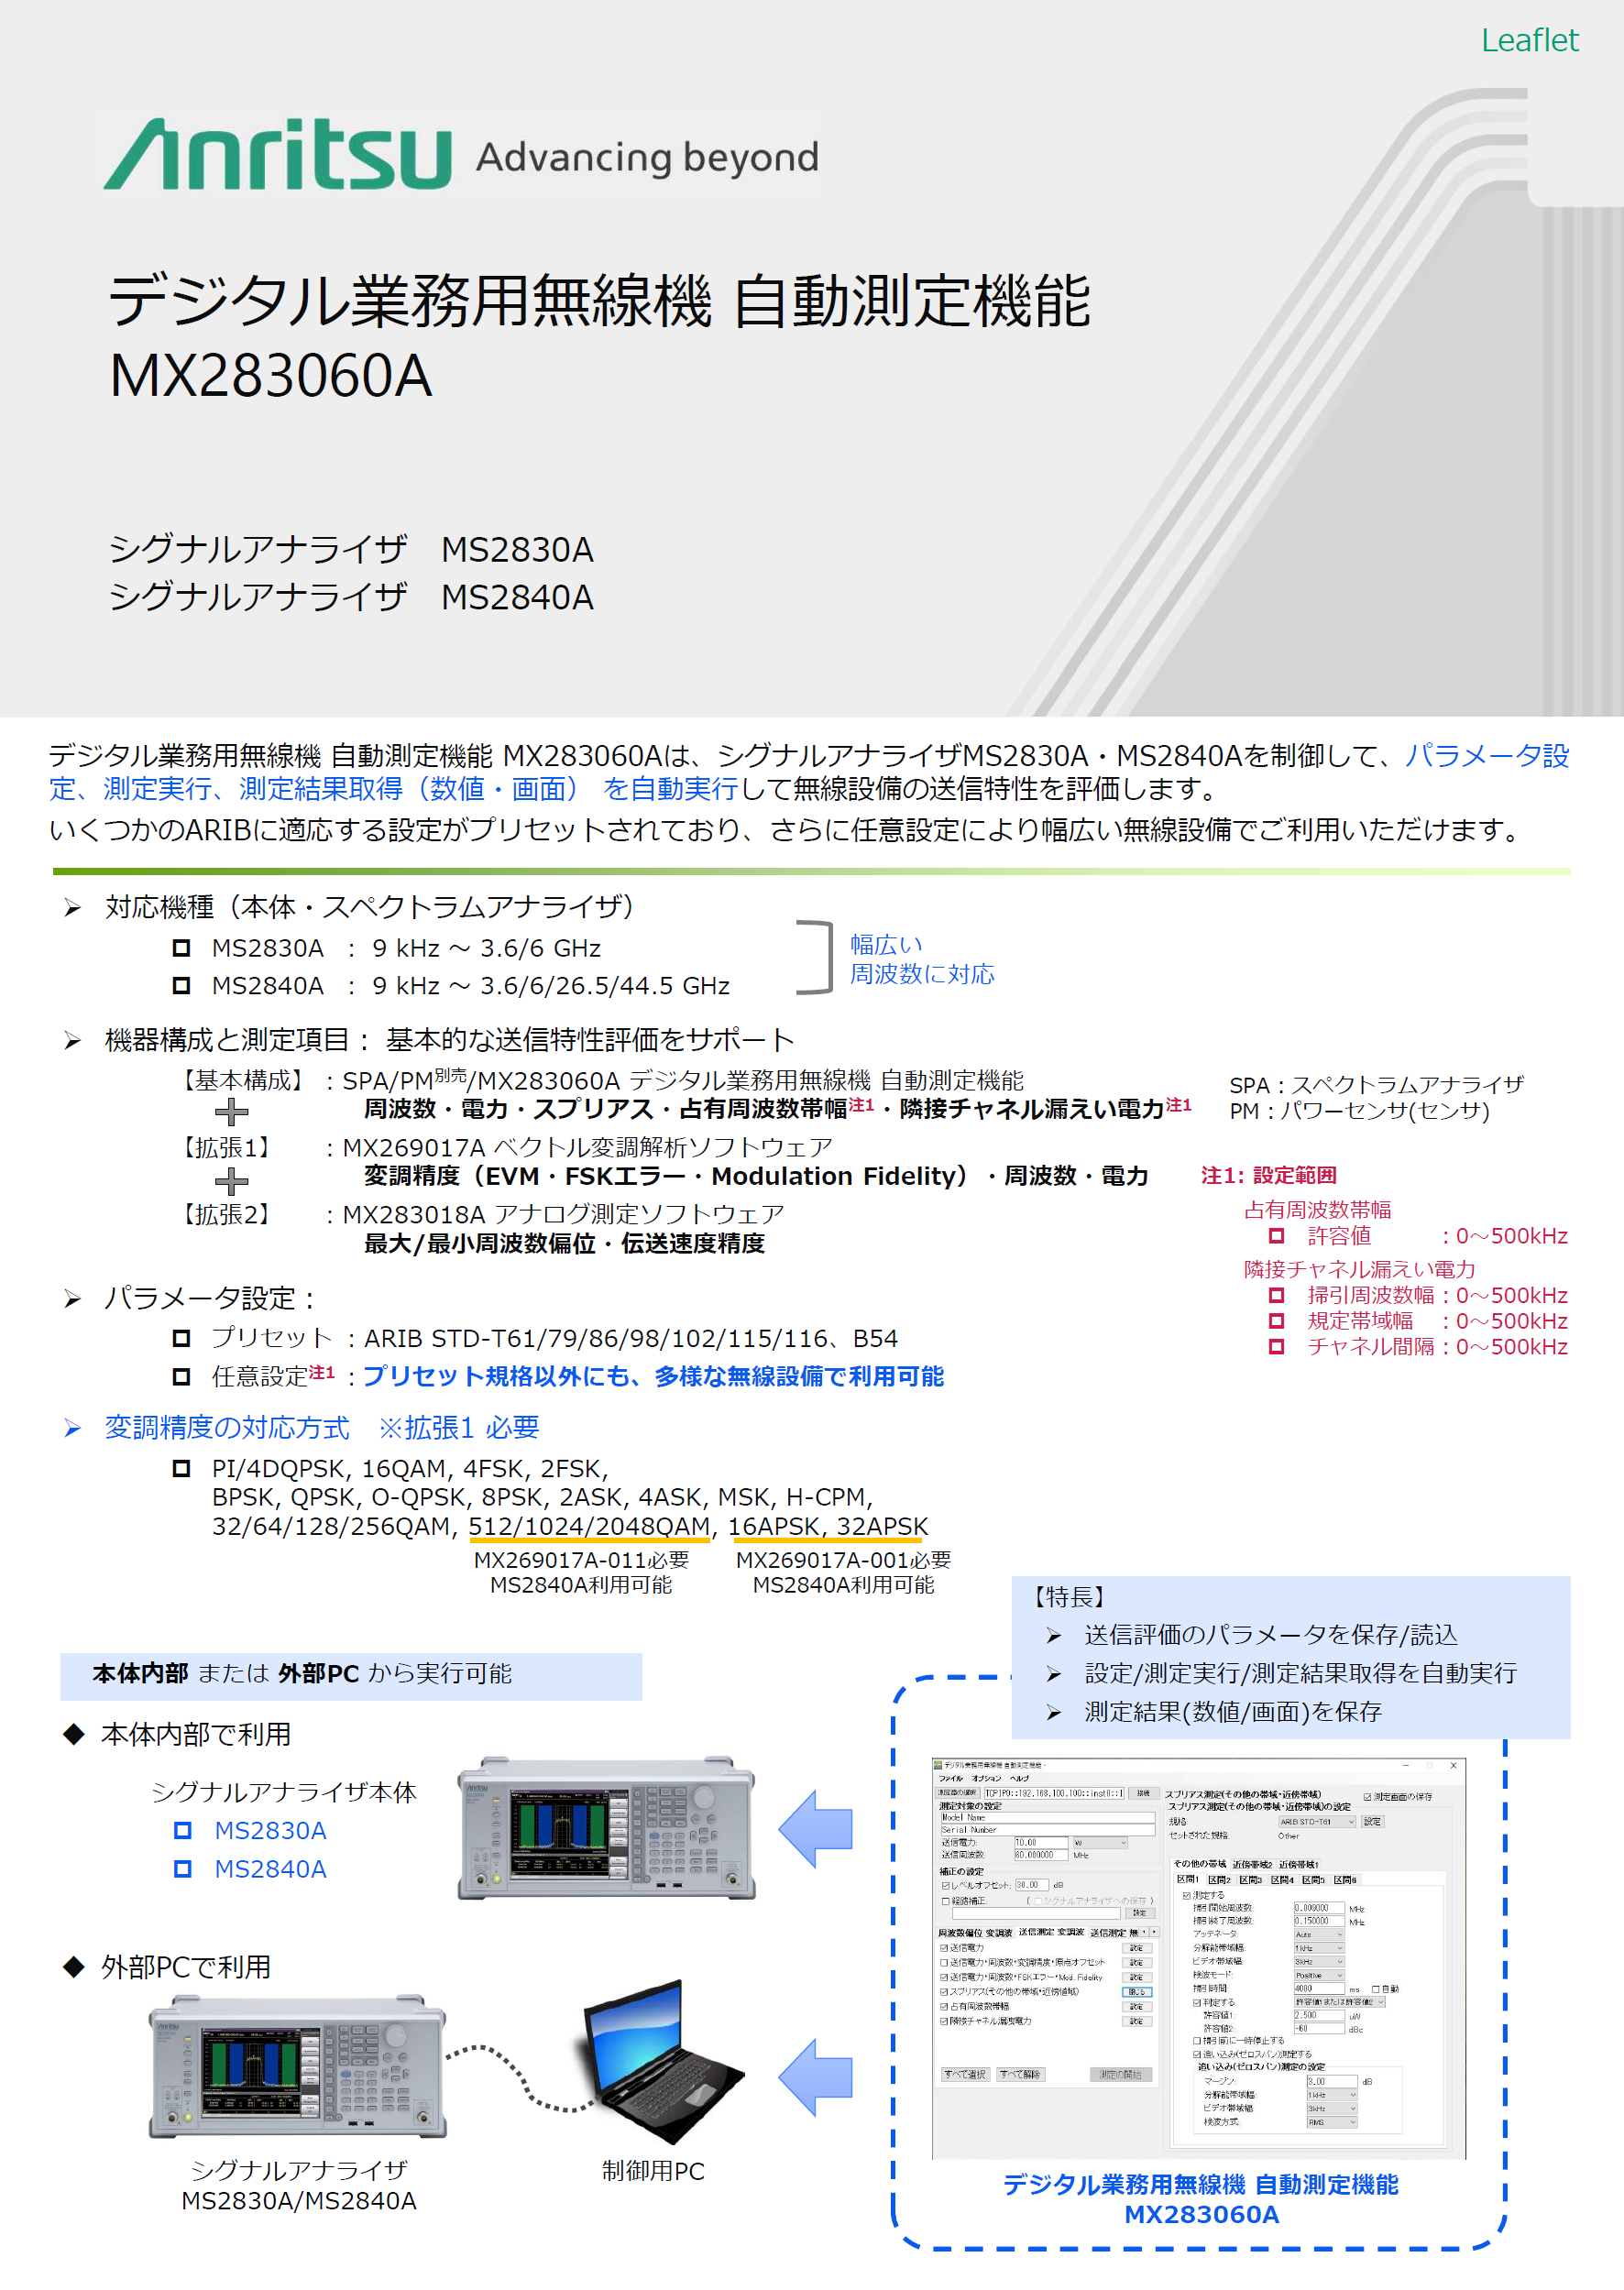 MX283060A_LeafletCapture.png